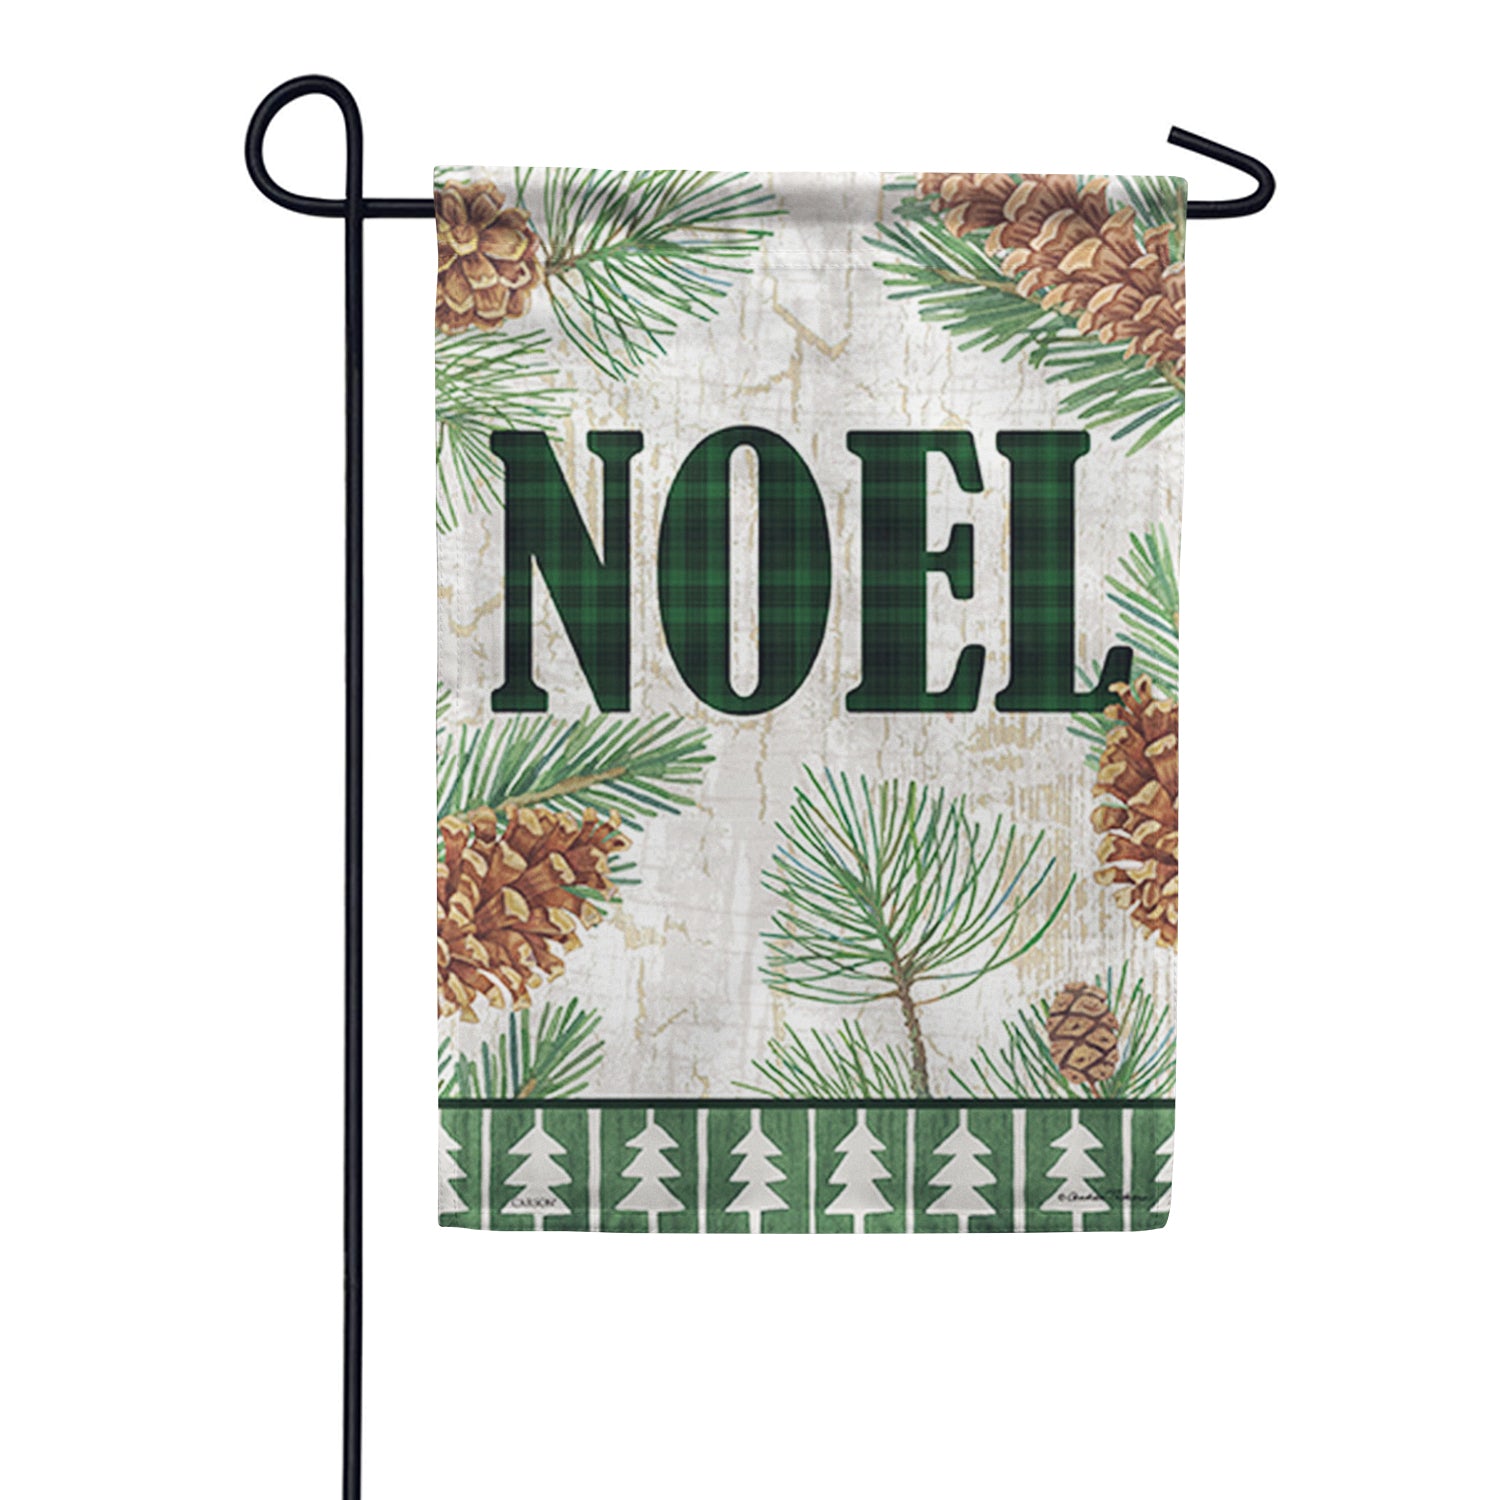 Noel and Pine Garden Flag